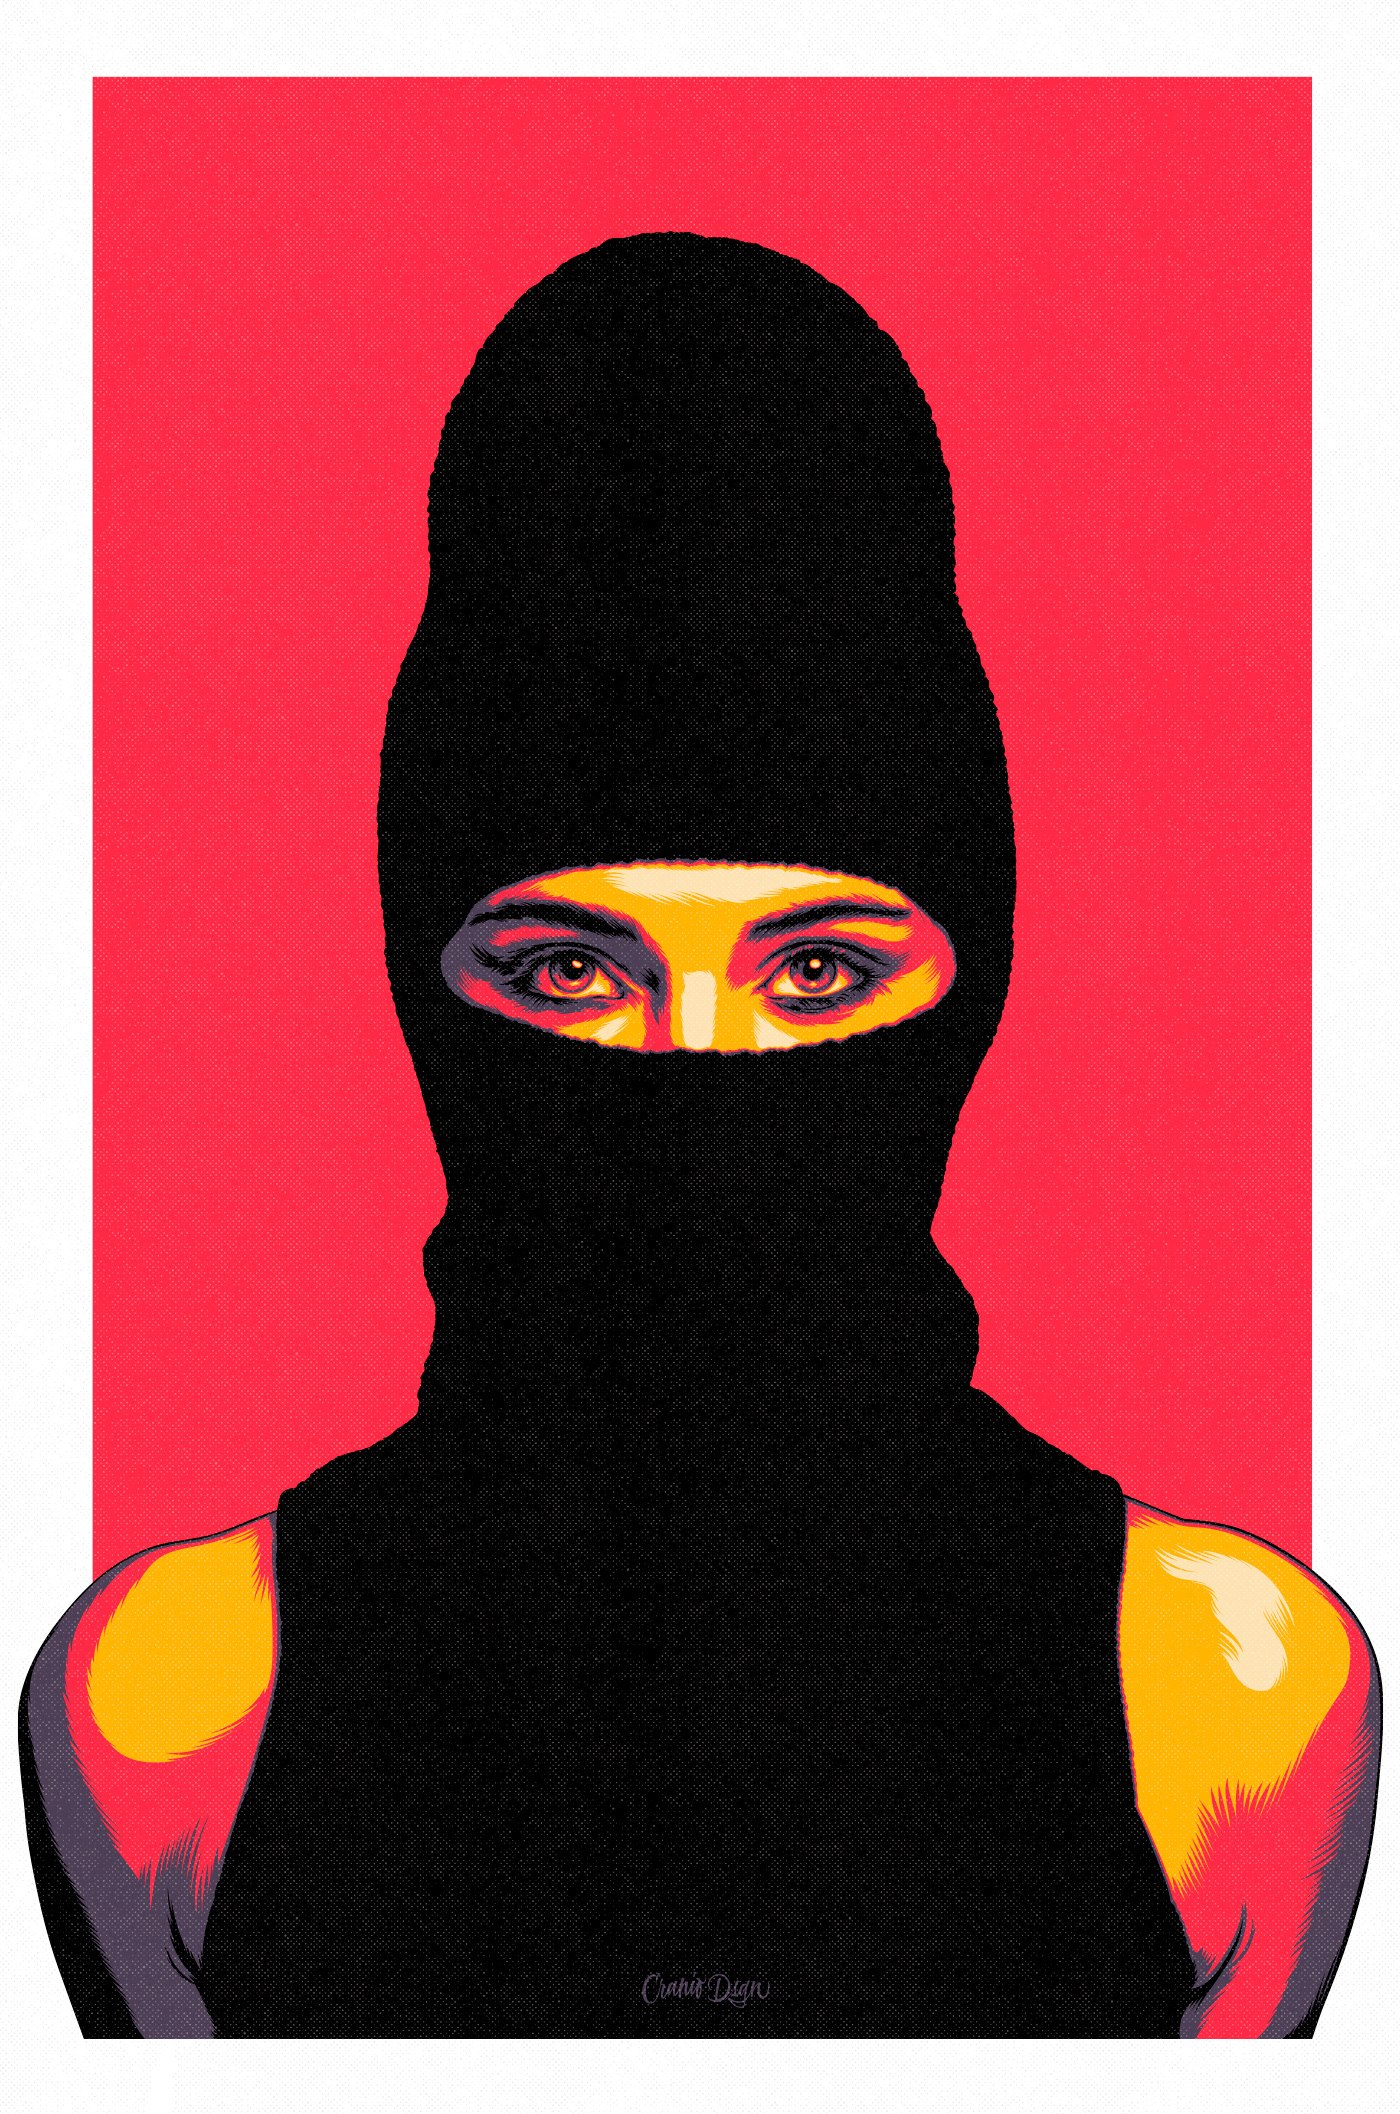 eyes portrait woman vector editorial magazine Cover Art ILLUSTRATION  Digital Art  adobe illustrator